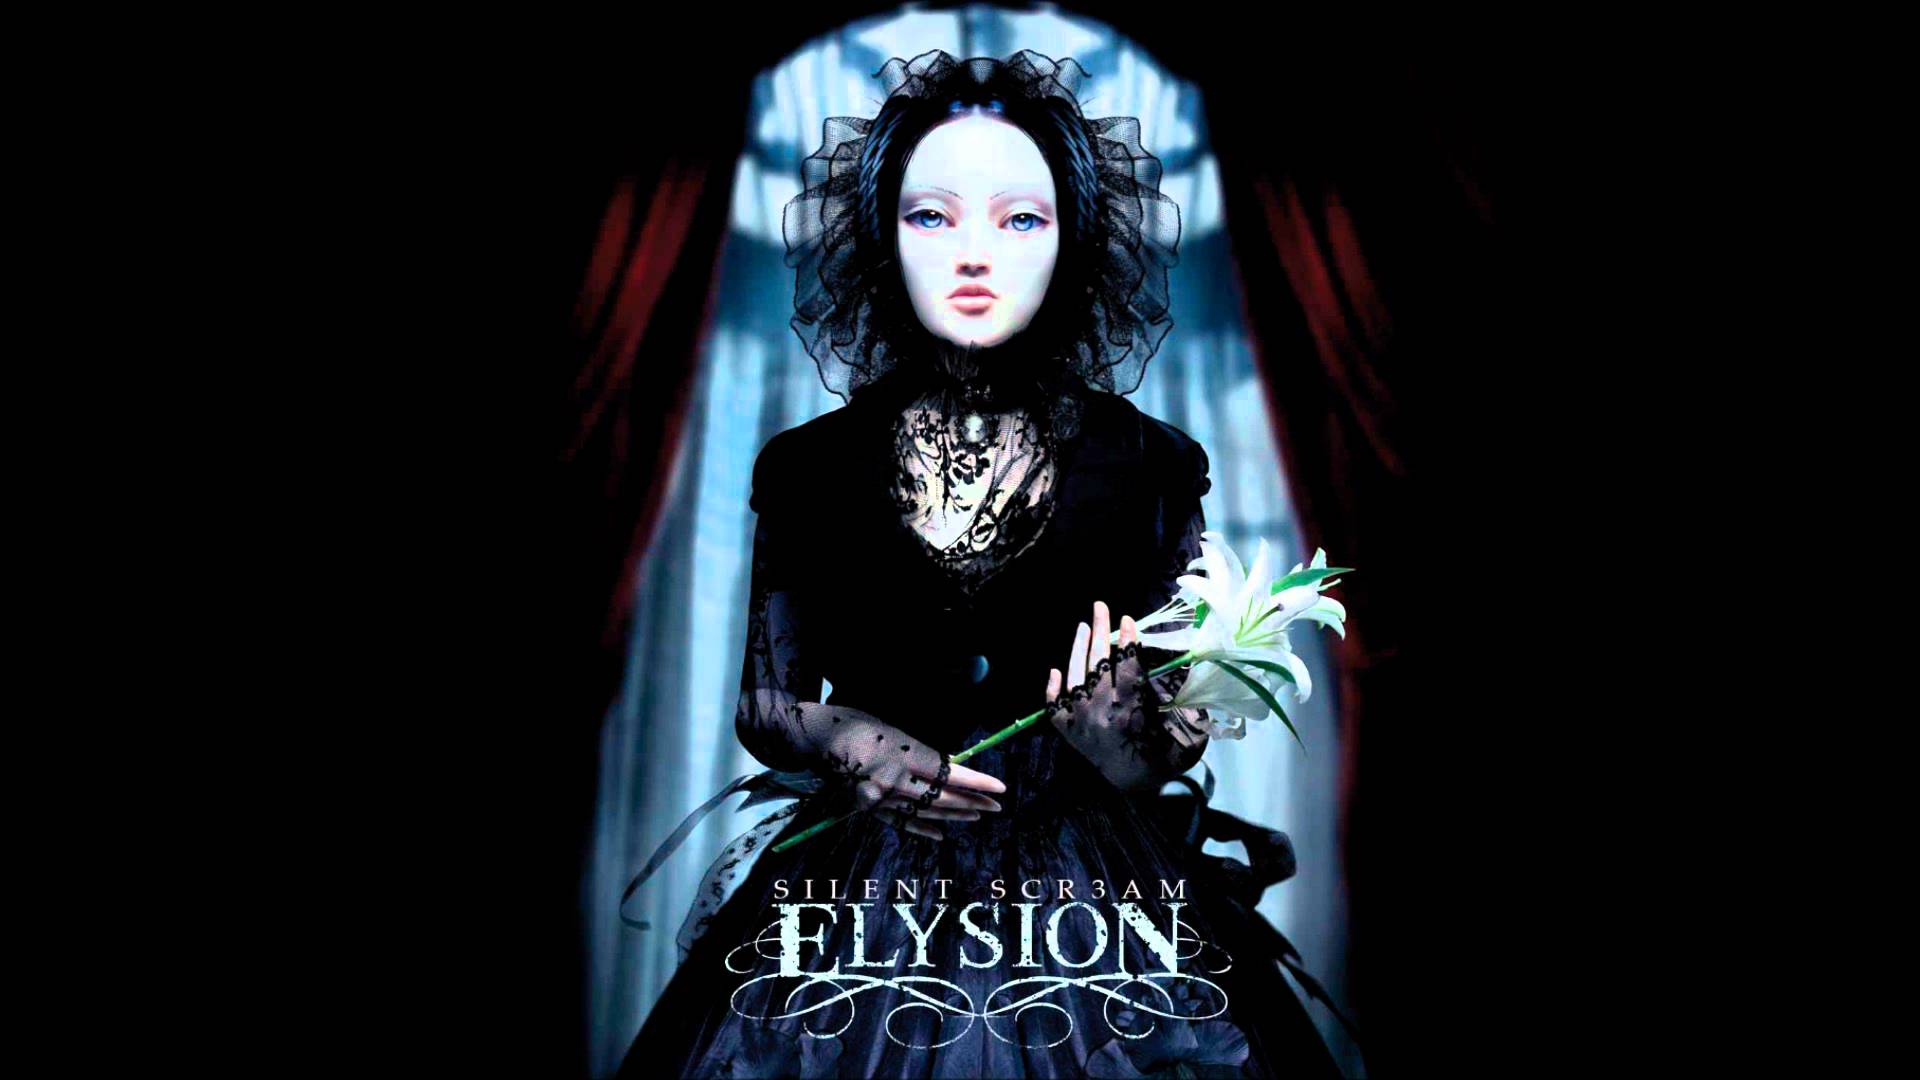 Elysion Me / Silent Scream